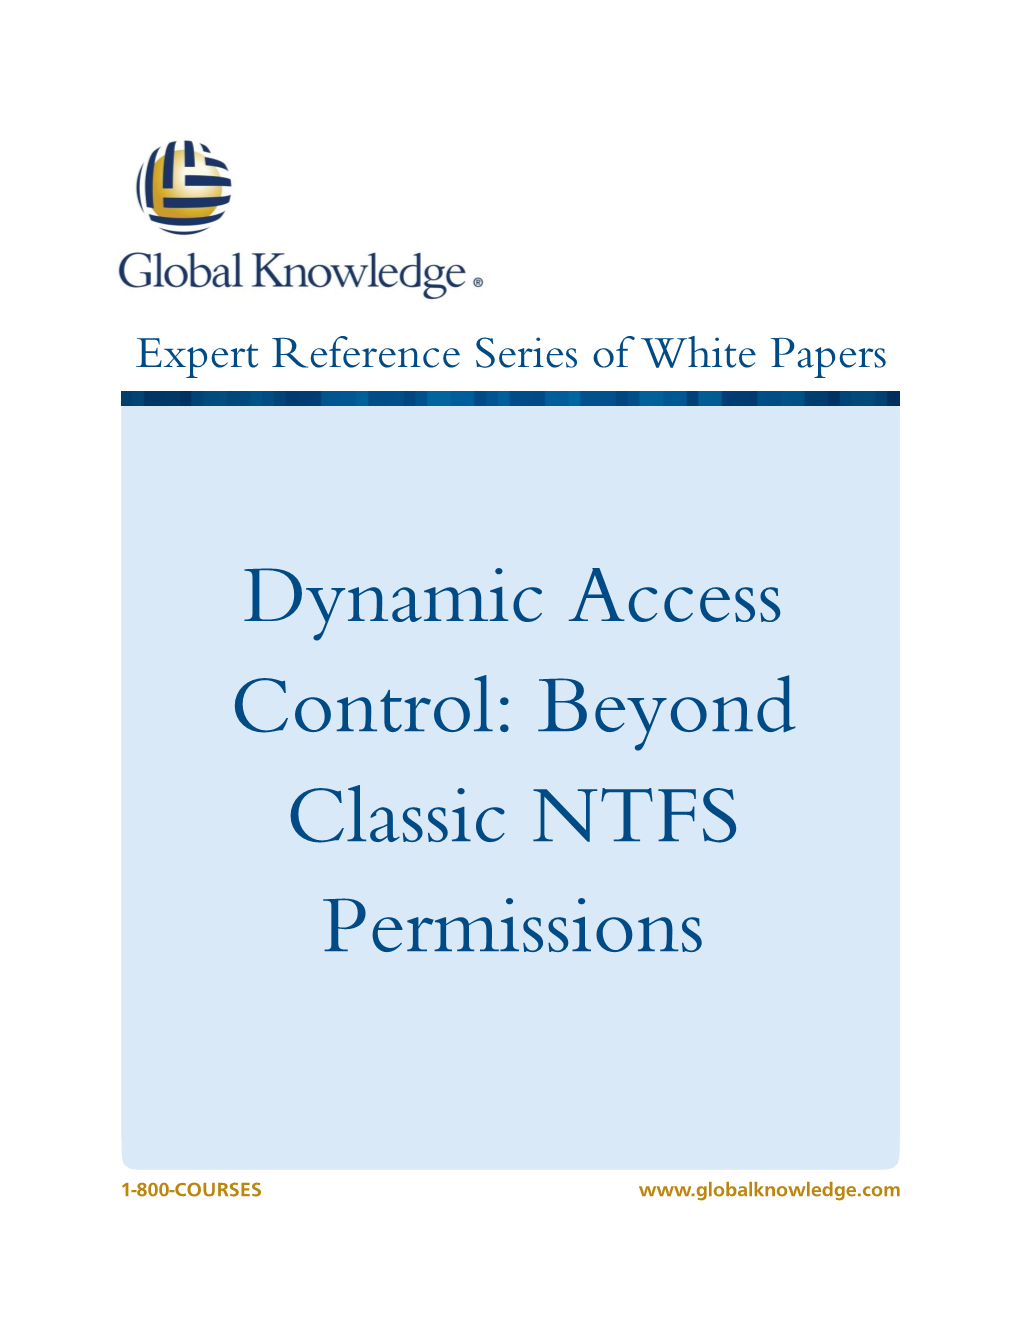 Dynamic Access Control: Beyond Classic NTFS Permissions Glenn Weadock, Global Knowledge Instructor, MCITP, MCSE, MCT, A+